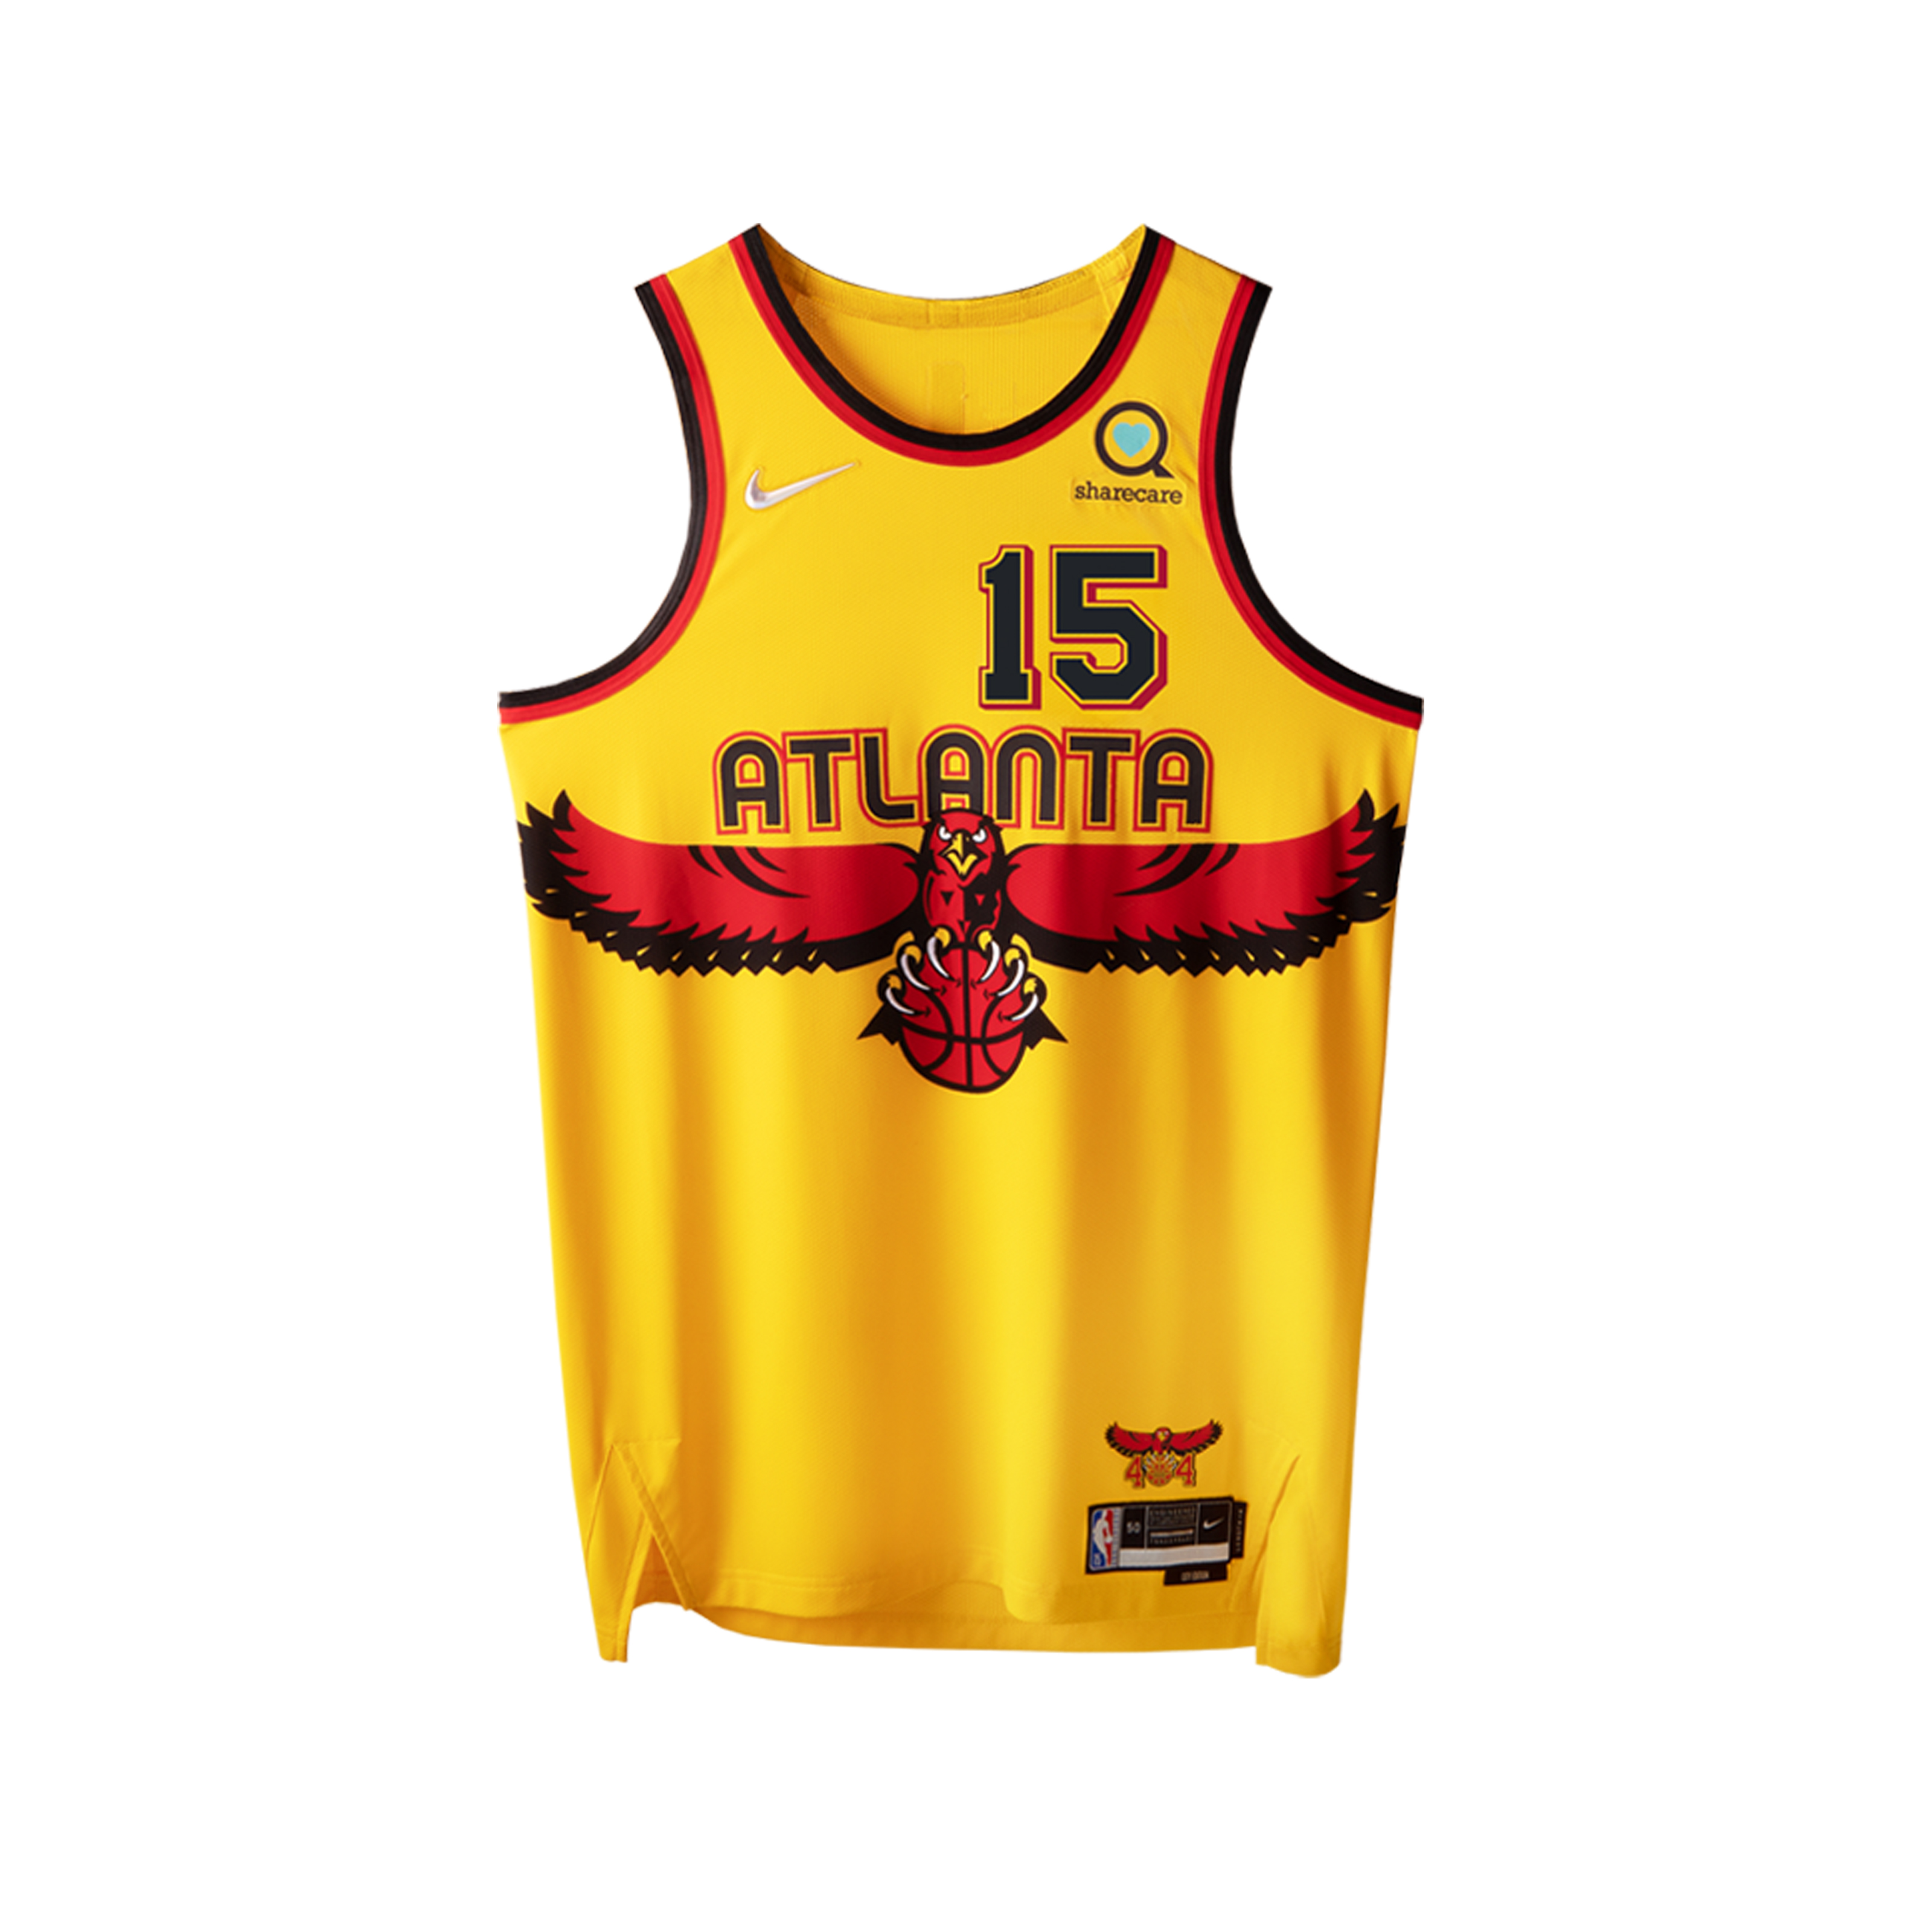 Hawks' City Edition uniforms revealed